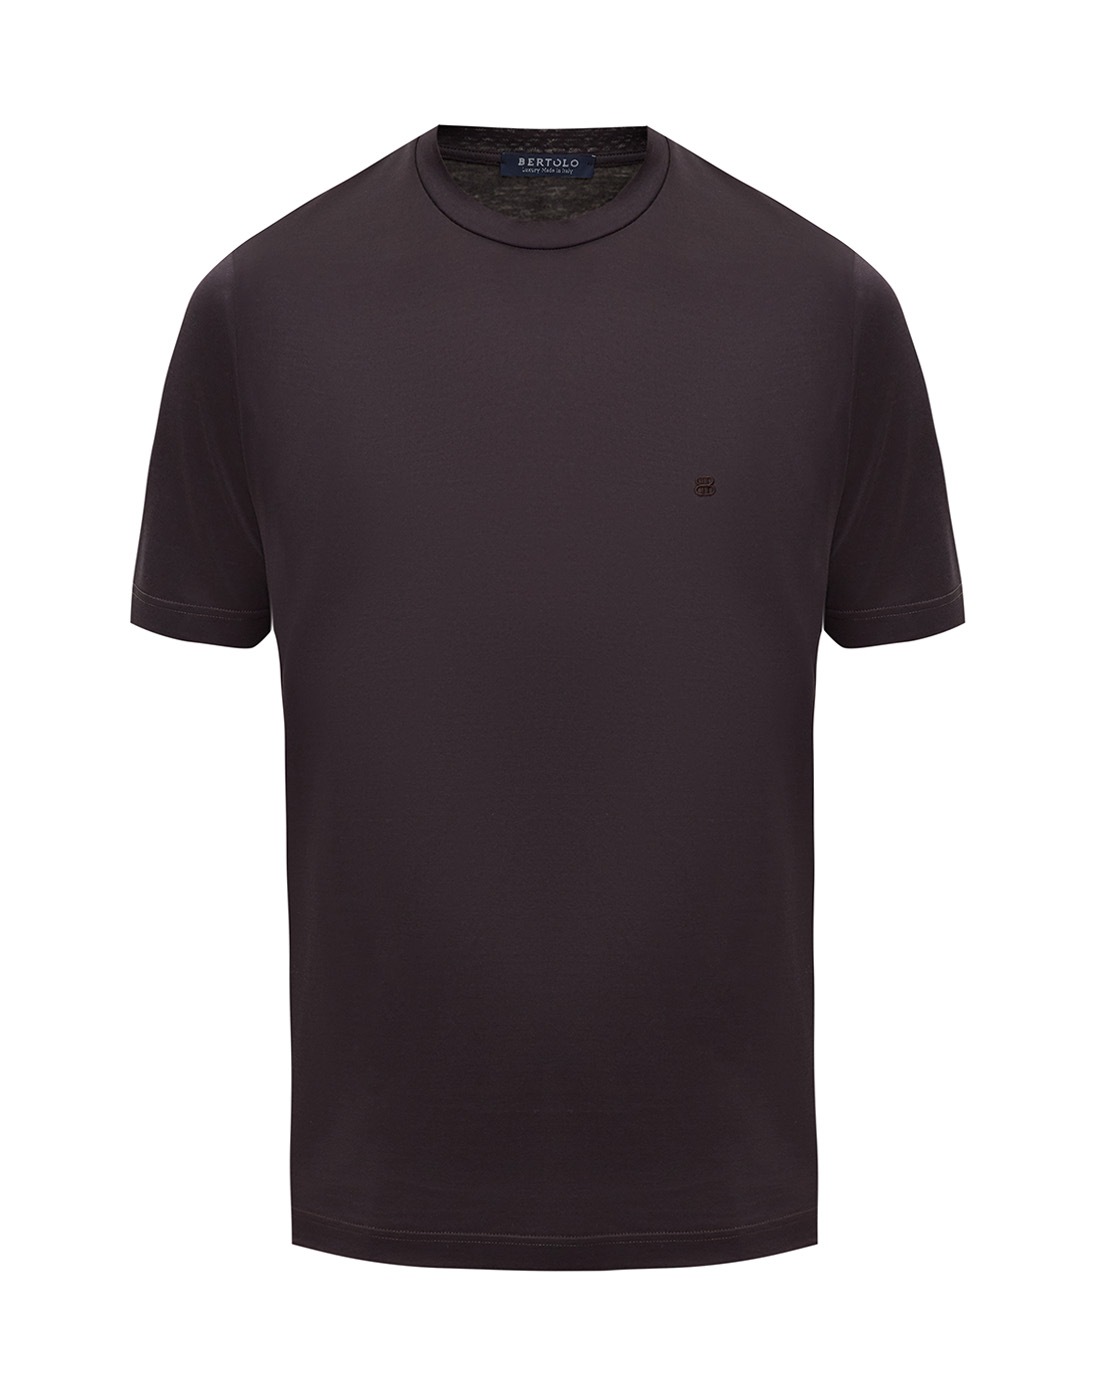 Мужская темно-коричневая футболка  Bertolo S000252/001912/0004-1